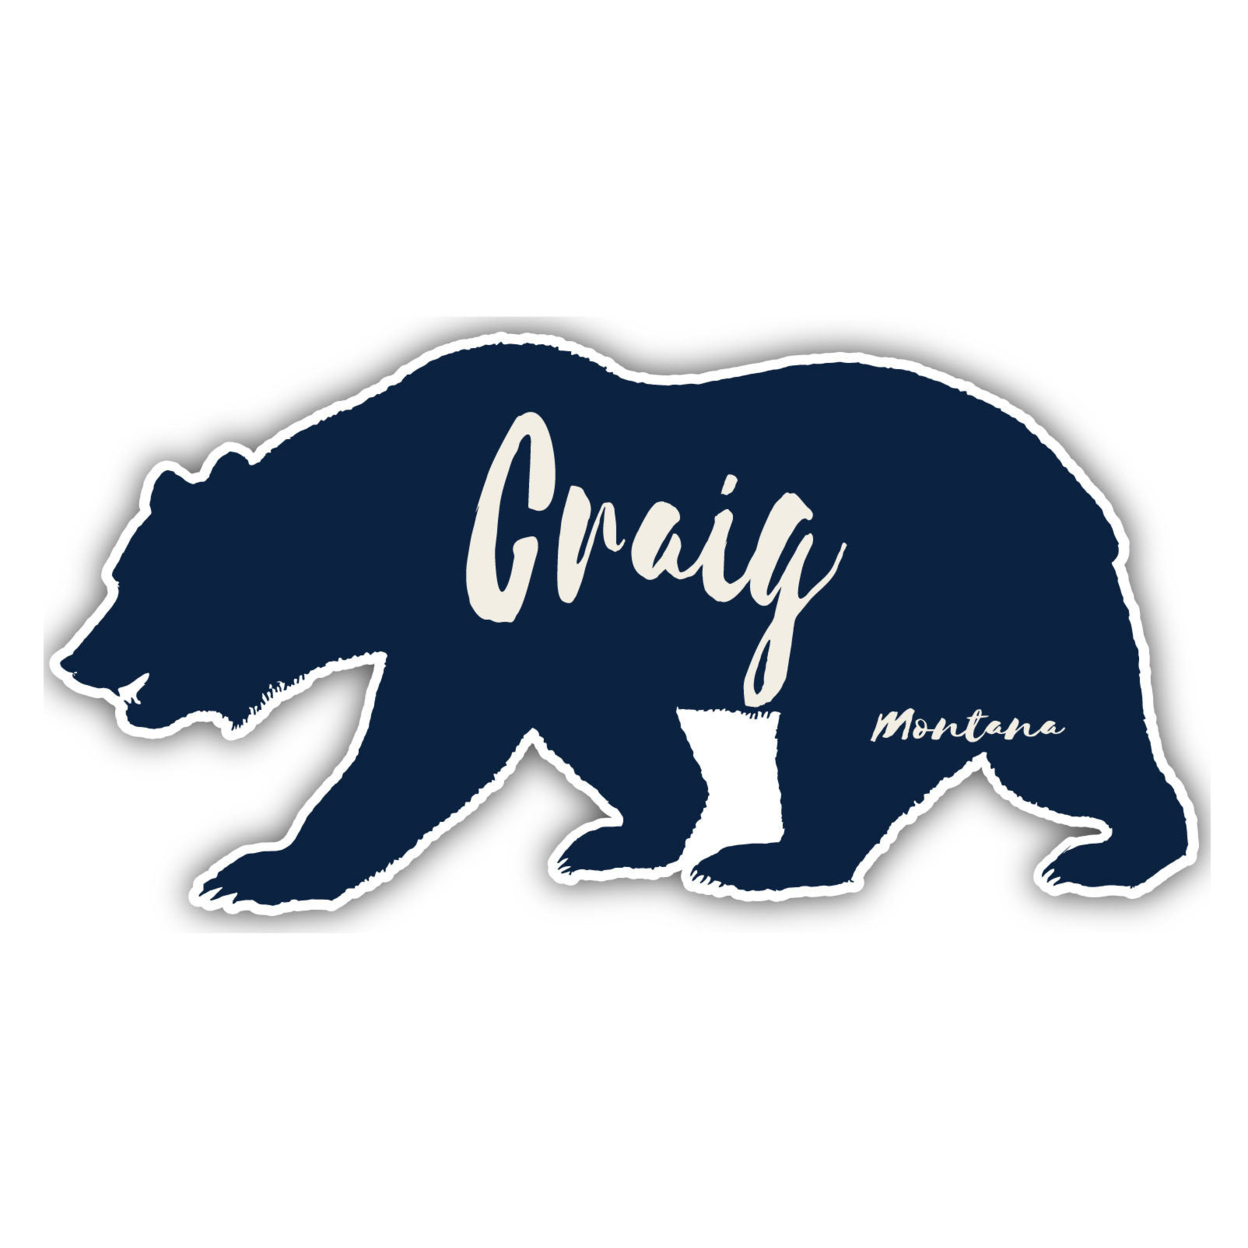 Craig Montana Souvenir Decorative Stickers (Choose Theme And Size) - Single Unit, 12-Inch, Bear